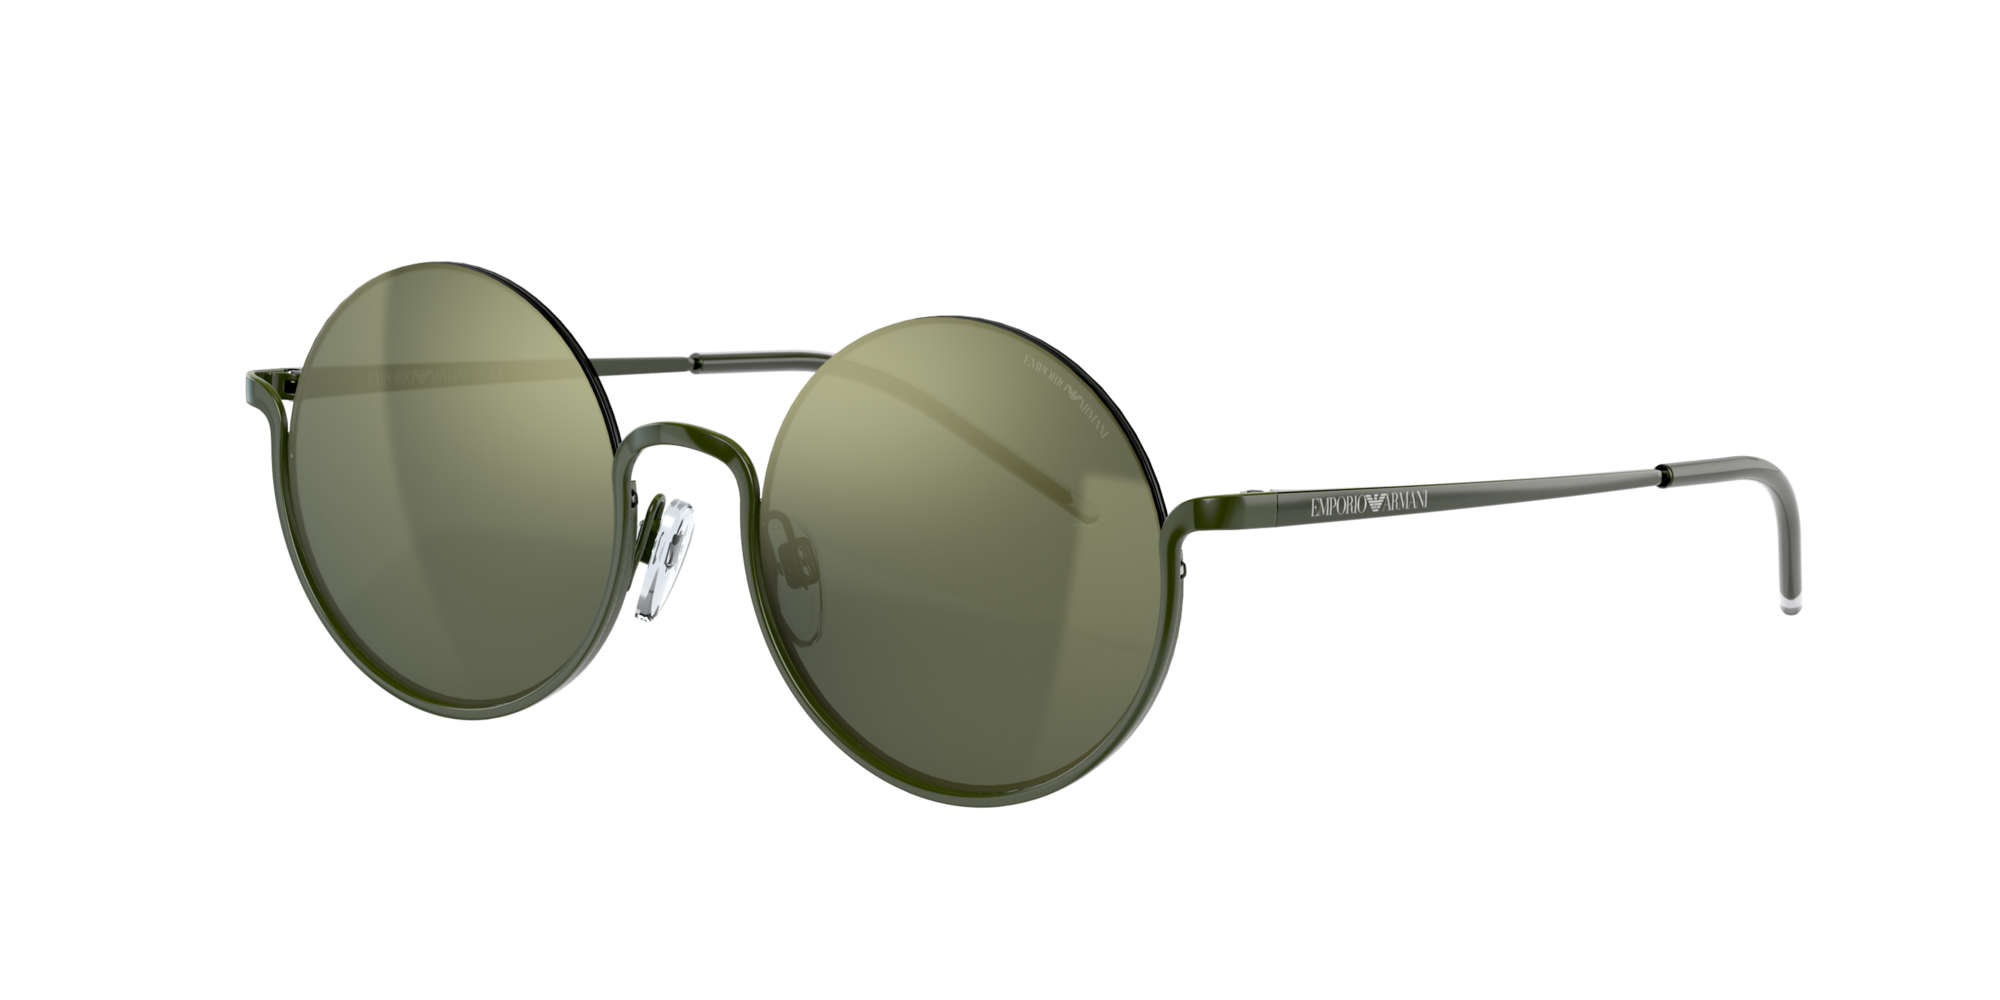 Emporio Armani Woman Sunglasses, Green Lenses Metal Frame, 50mm